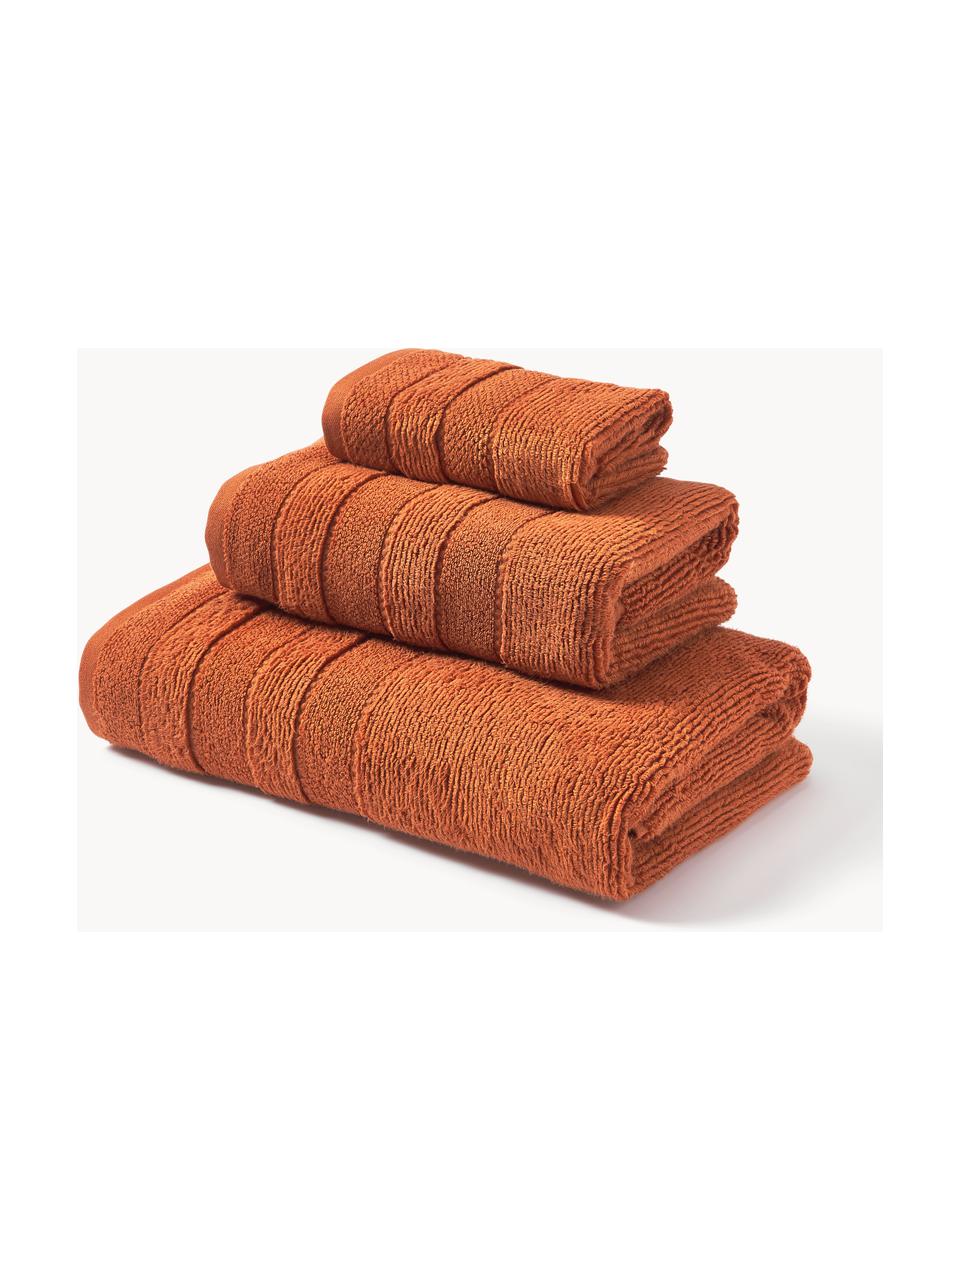 Set de toallas con borde a rayas Luxe, 3 uds., Naranja, Set de 3 (toalla tocador, toalla lavabo y toalla ducha)